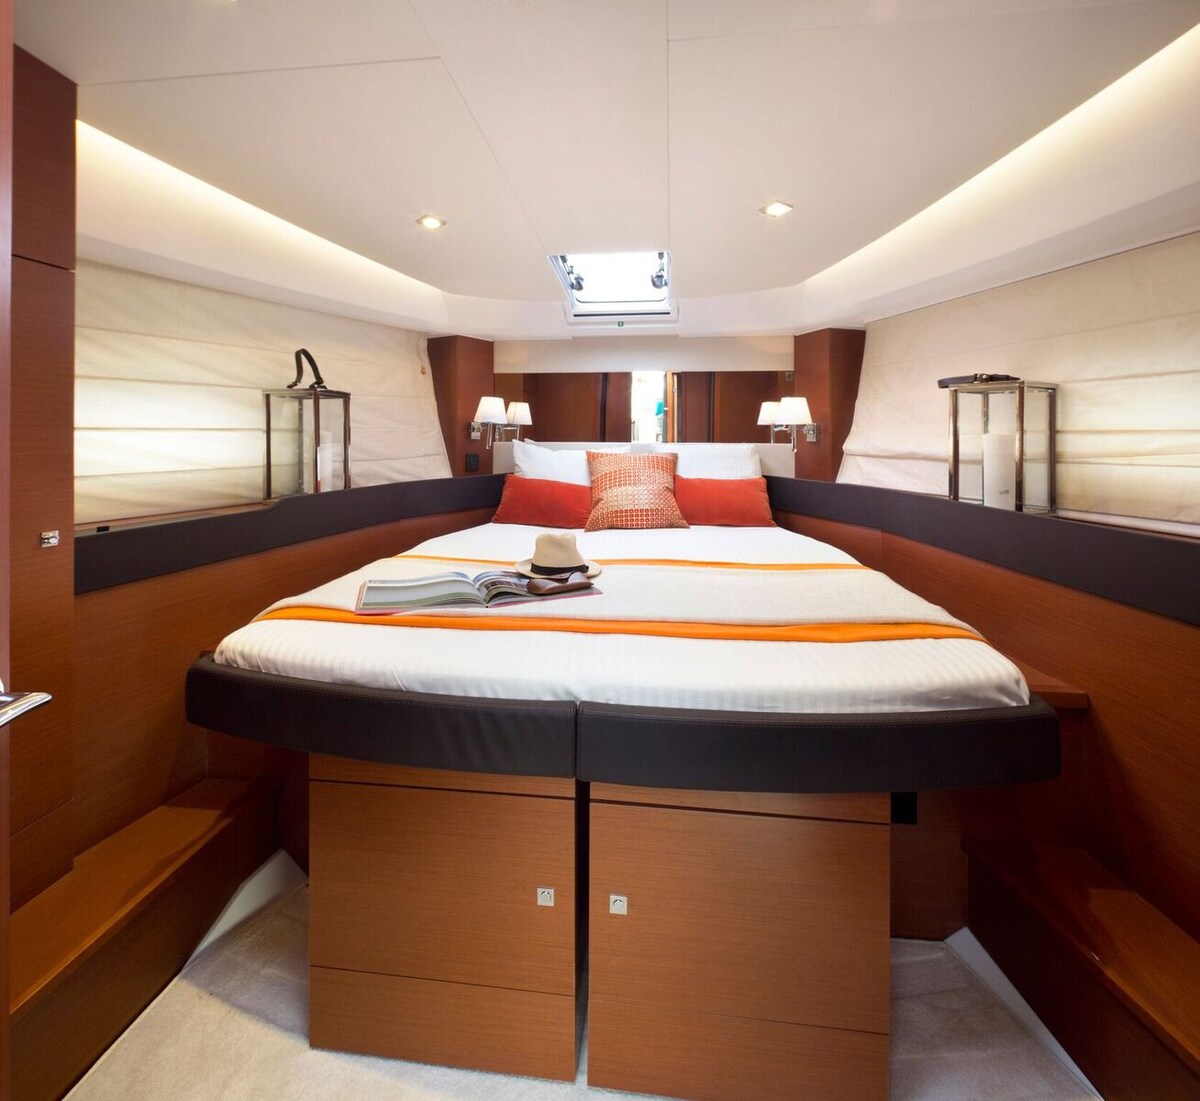 NC14 Luxury Yacht on Ha Long bay - 2 bedrooms